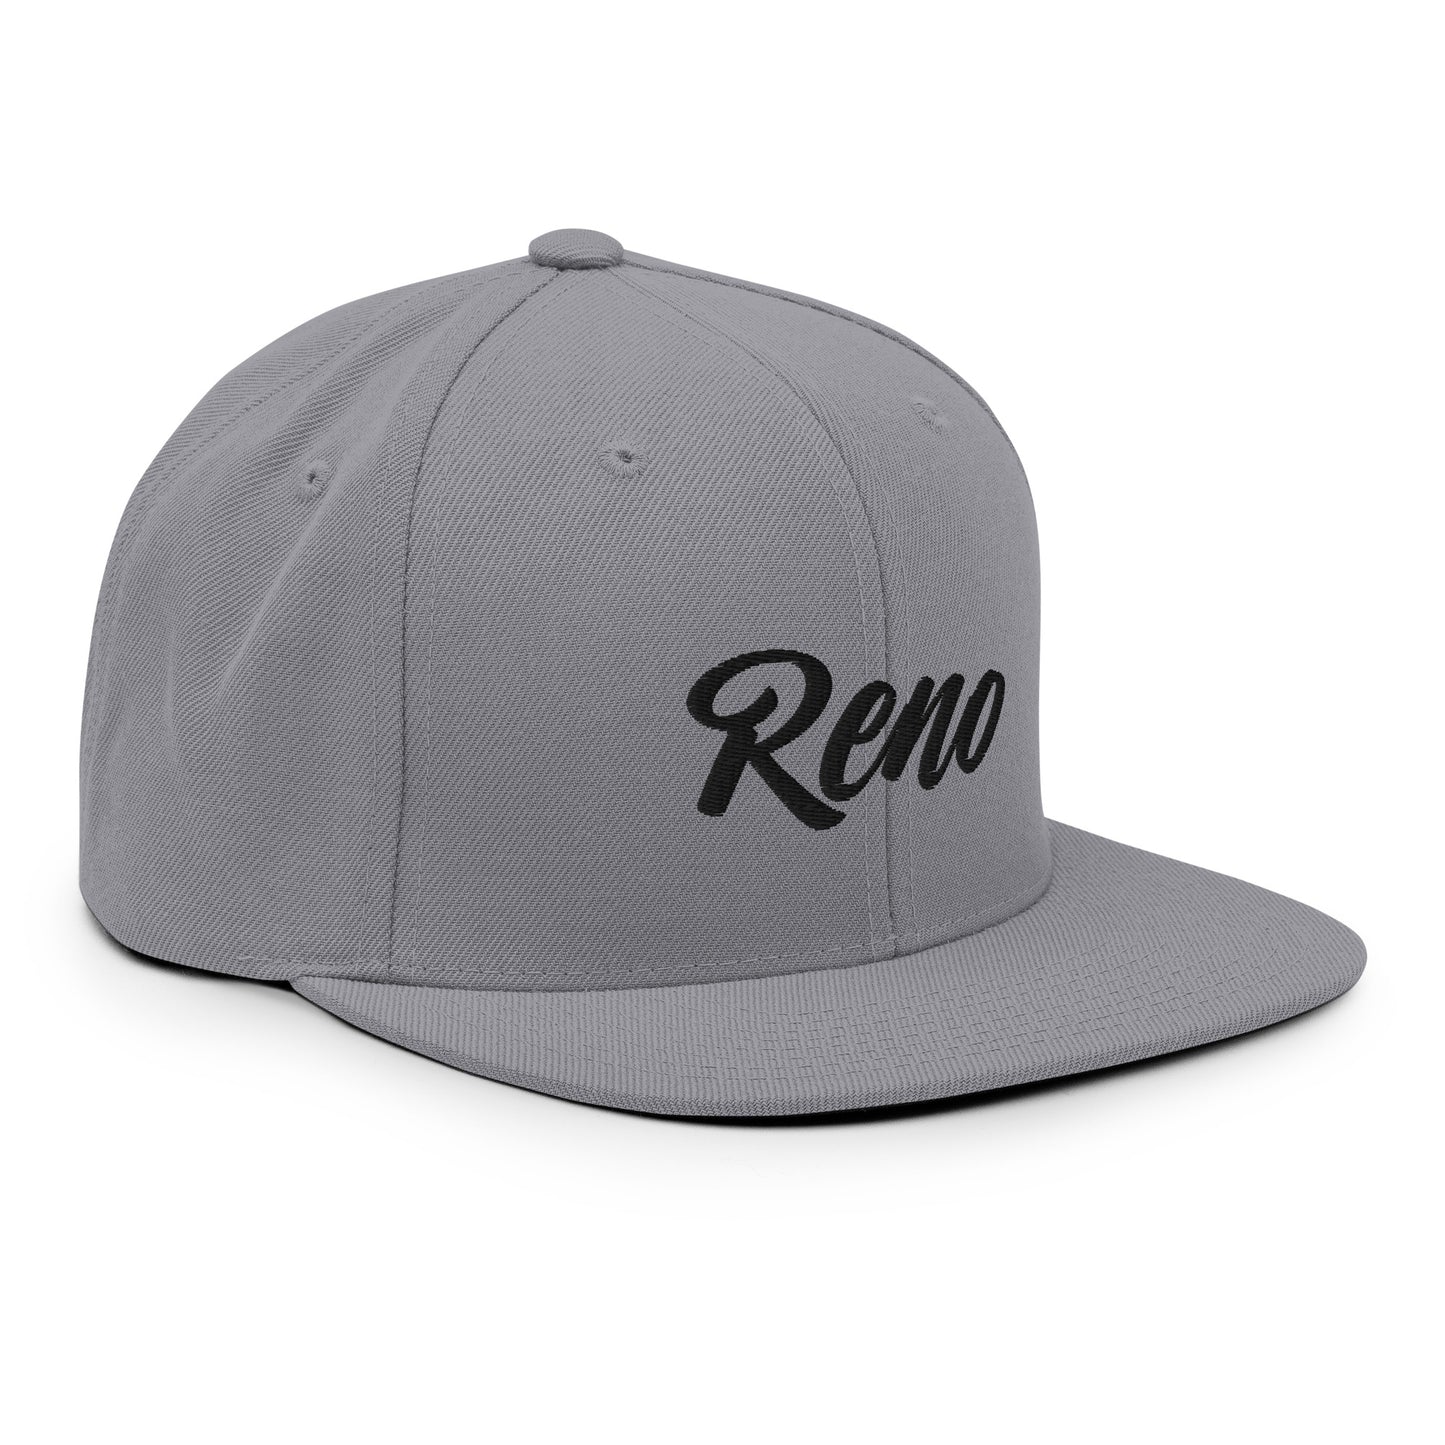 Reno Snapback Hat 3